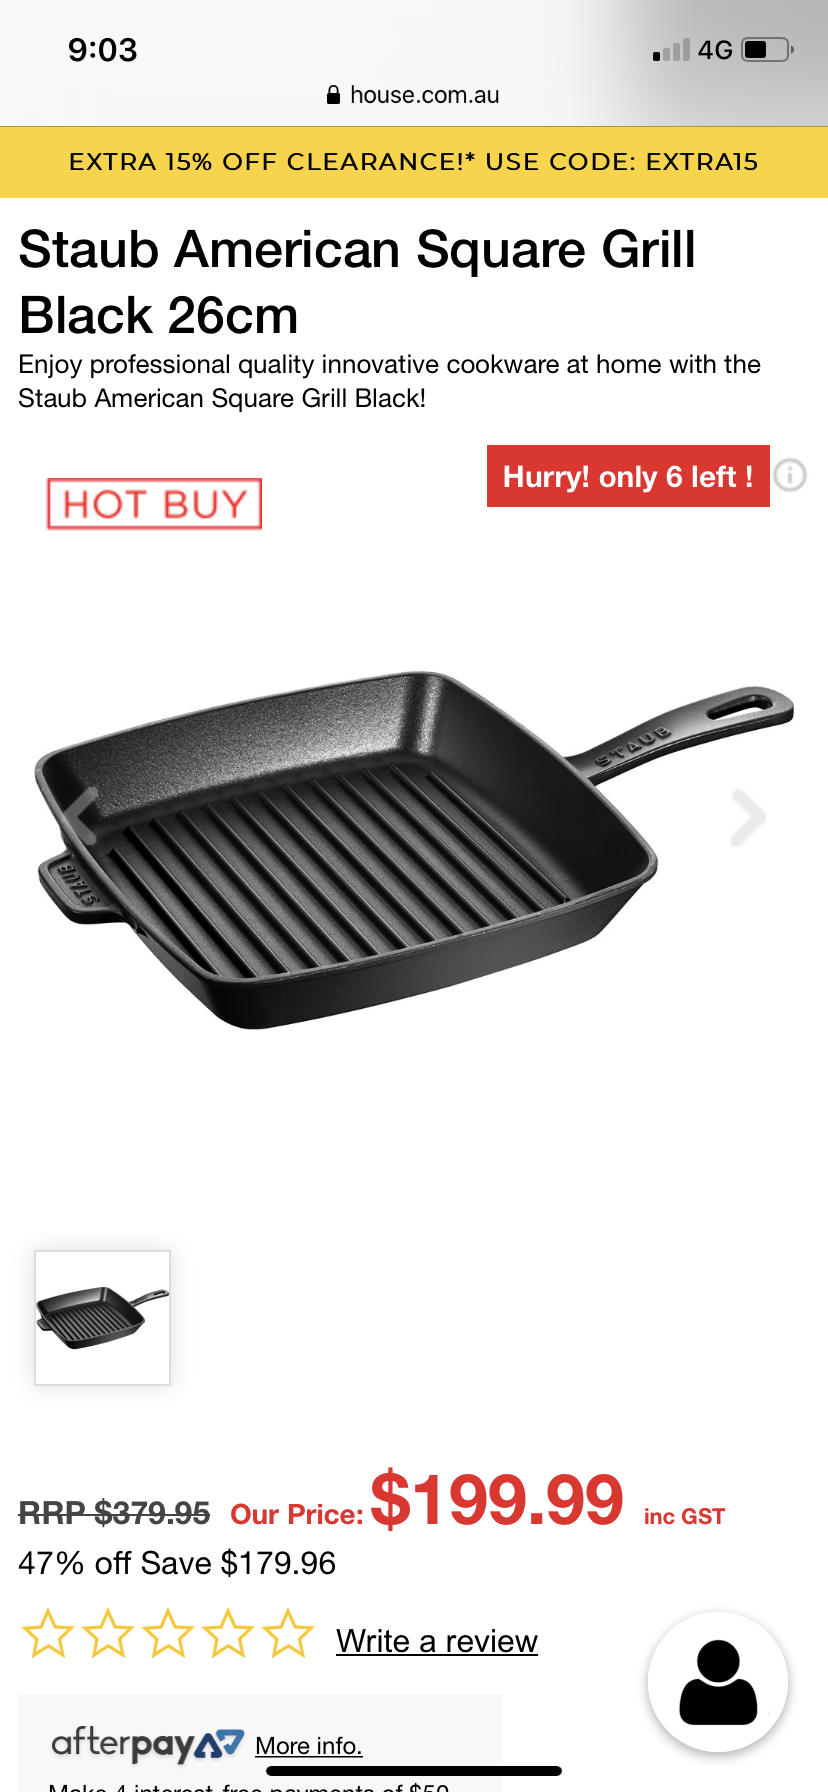 Cast iron grill pan